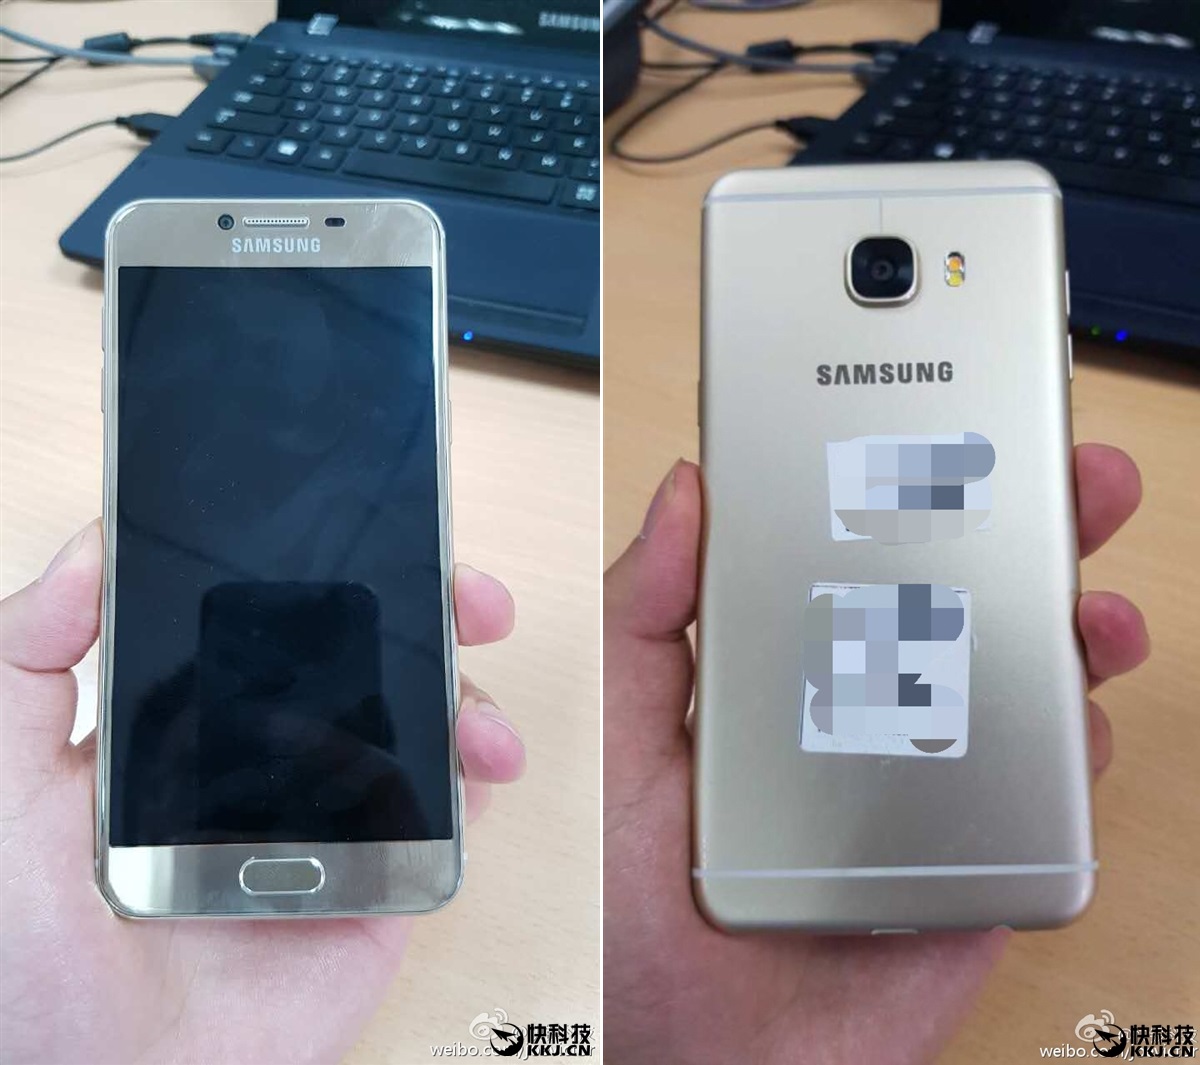 Samsung Galaxy C5 Leaked Image